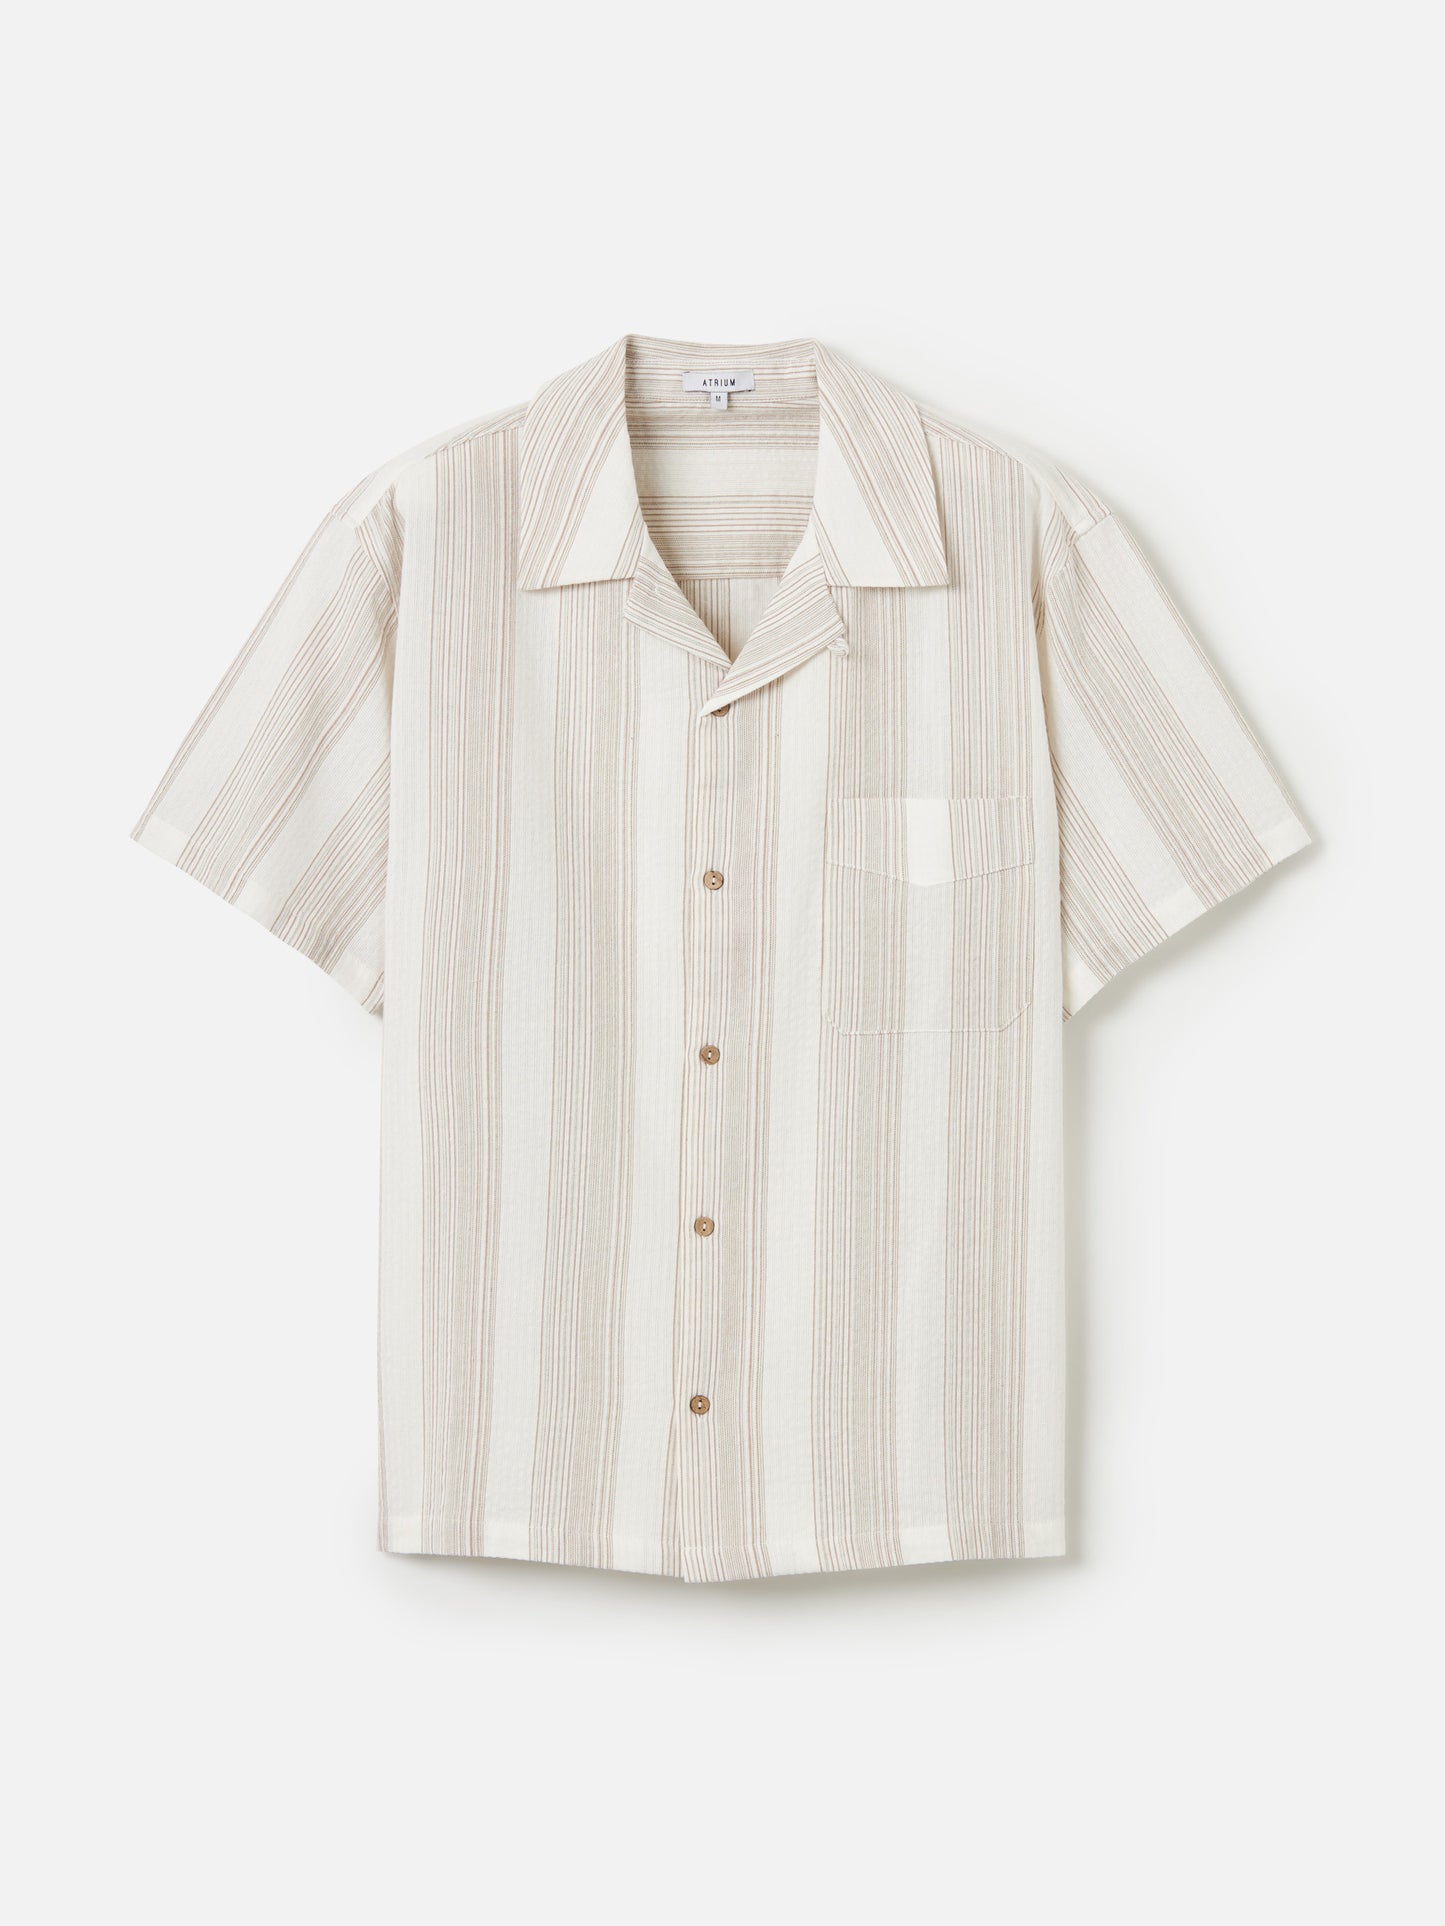 m tops - ATRIUM - Cotton Stripe Camp Shirt - PLENTY